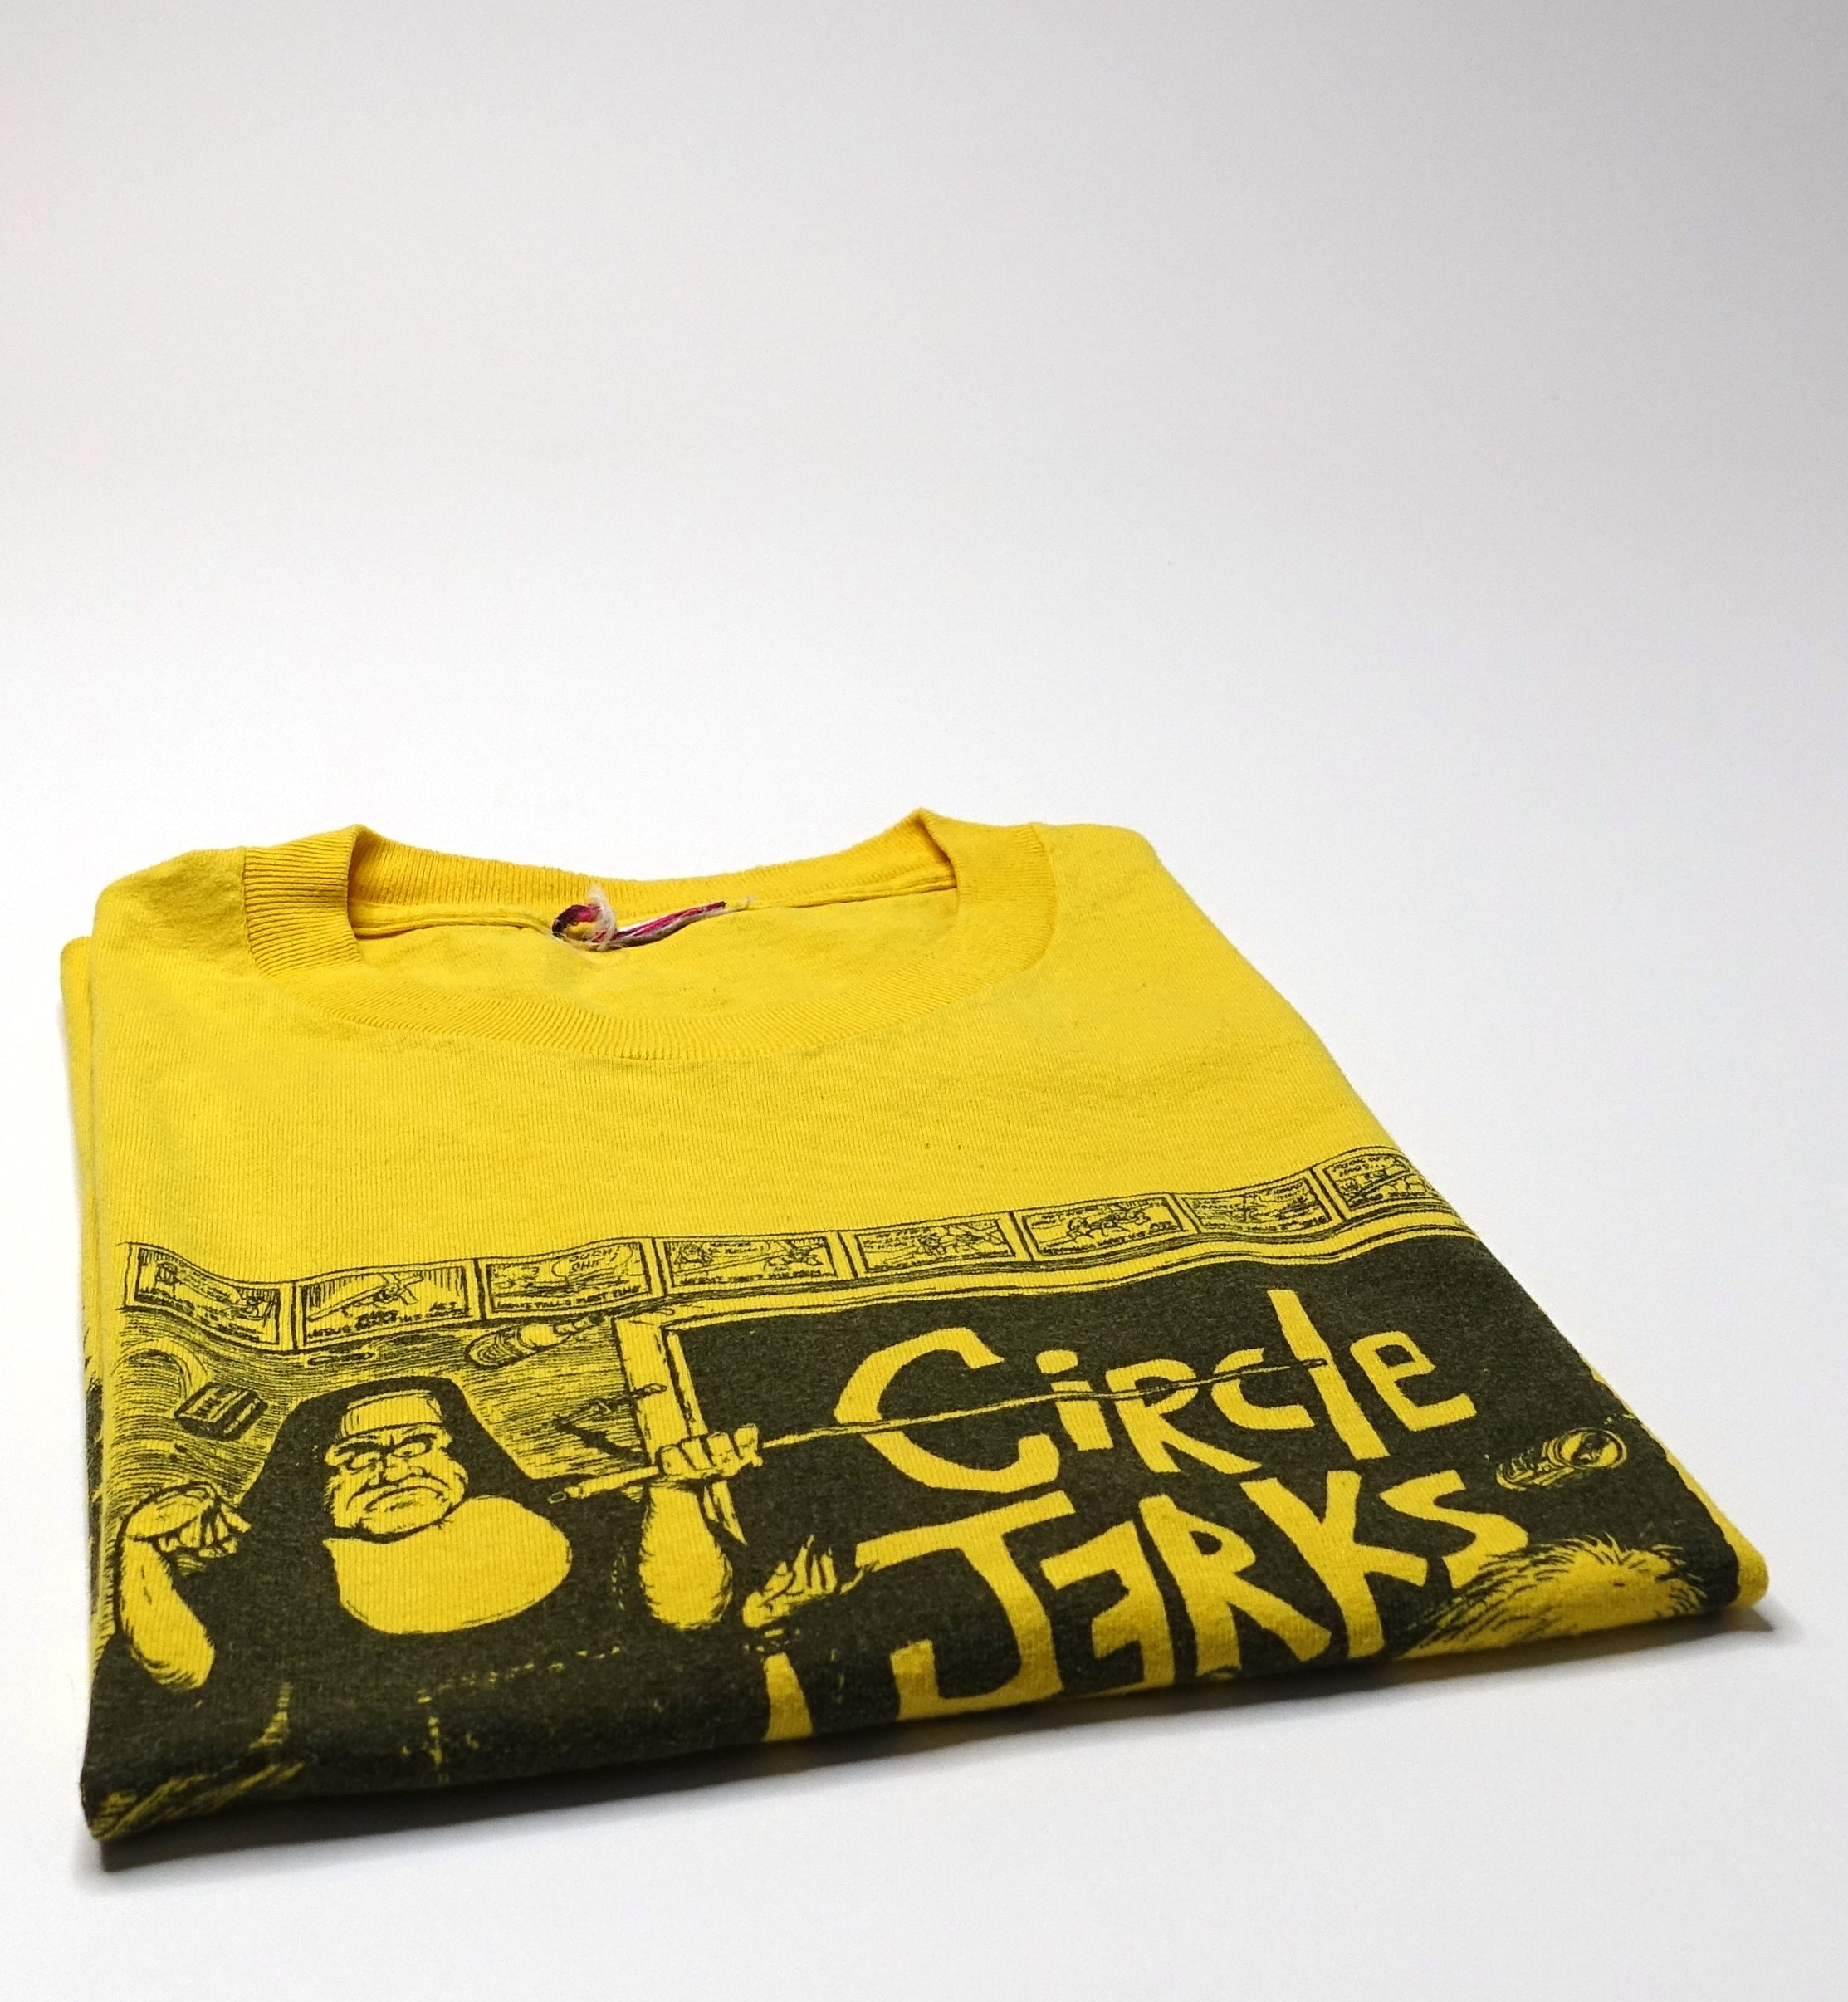 Circle Jerks - Shawn Kerri Catholic School Punks Shirt Size Large